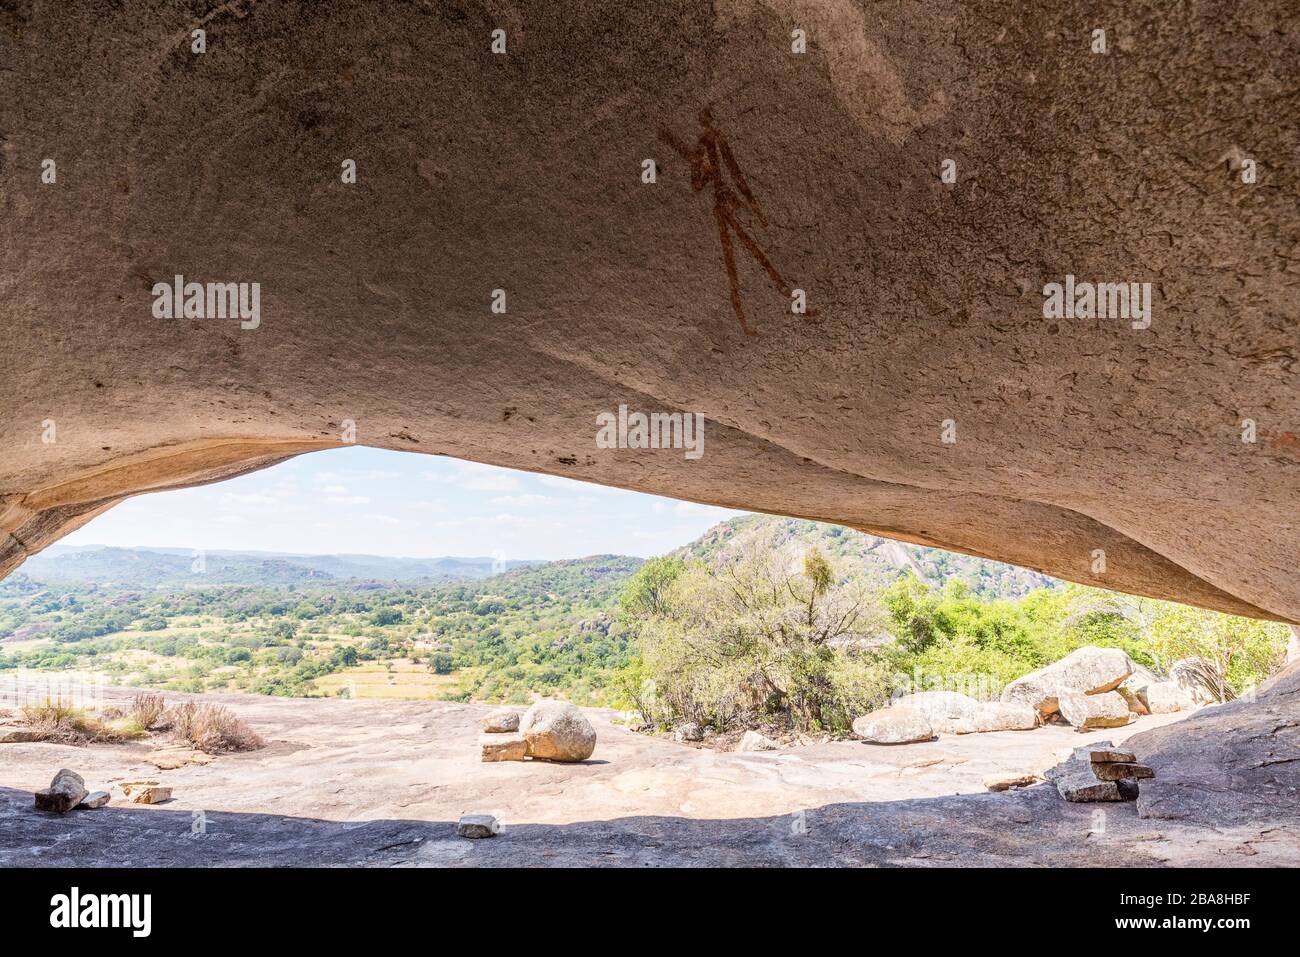 San rock art seen in Silozwane cave, Matobo National Park, Zimbabwe. Stock Photo